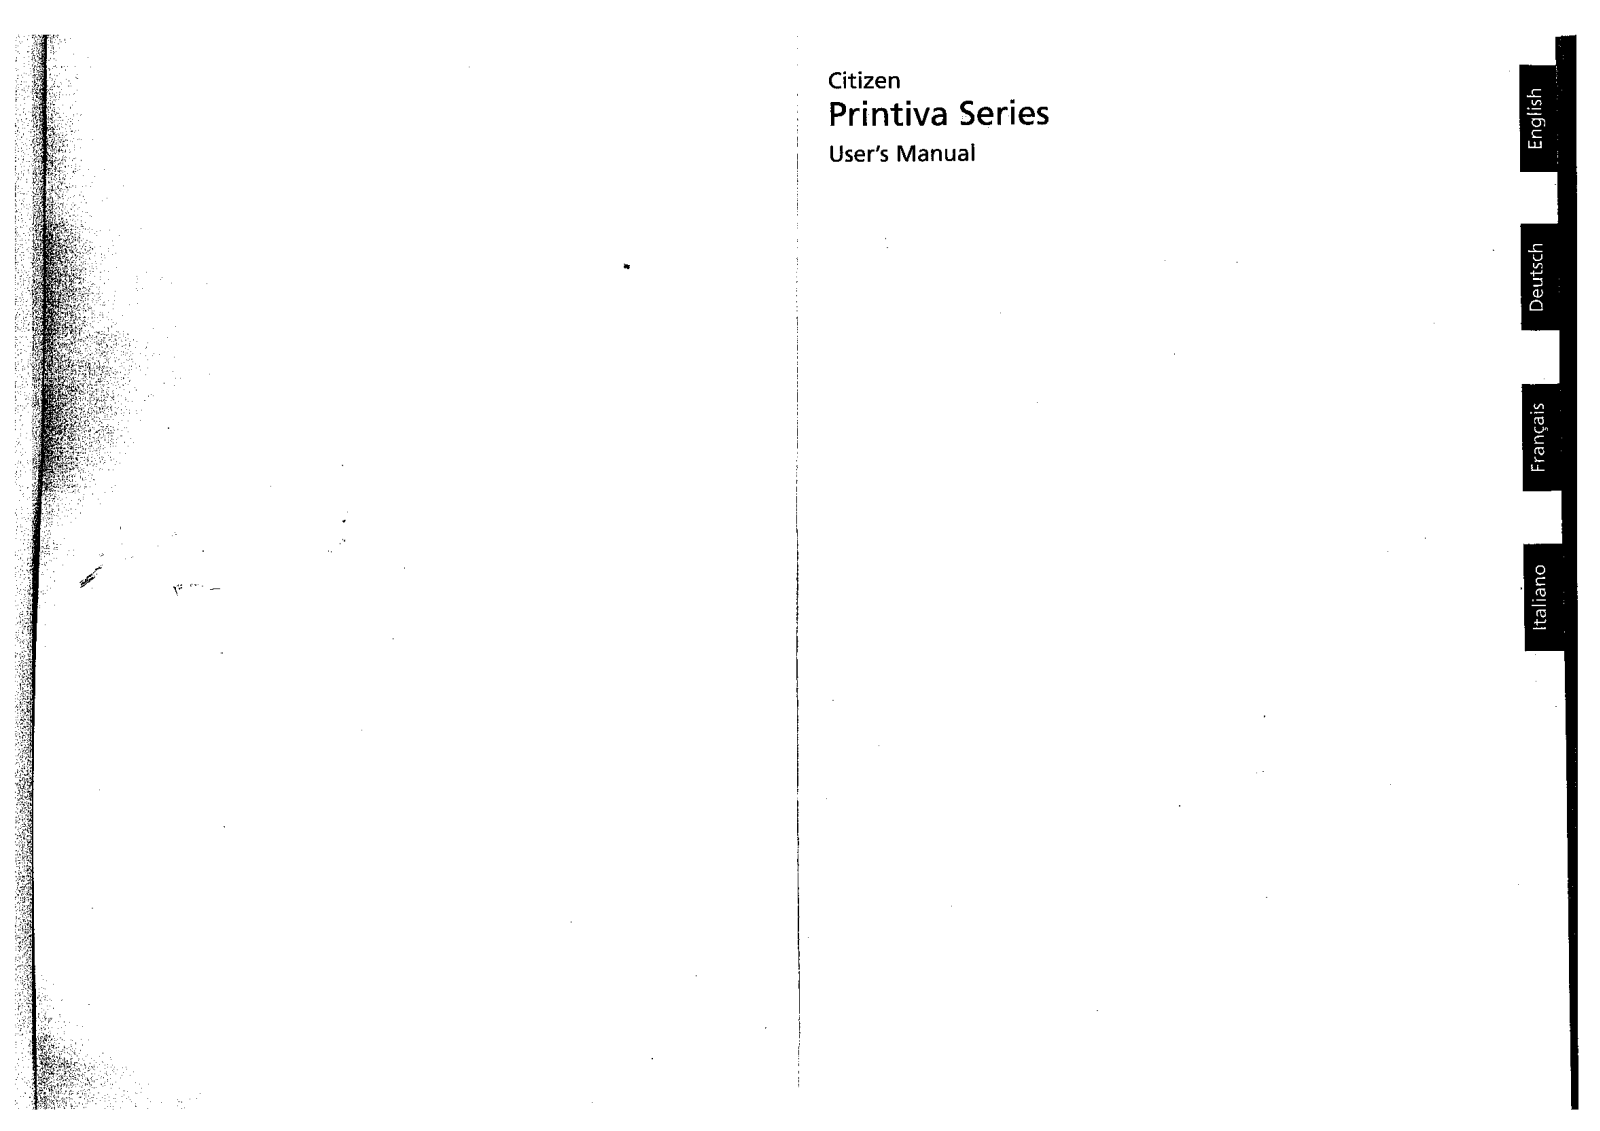 Citizen Printiva 1700, Printiva 600C, Printiva 700 User Manual